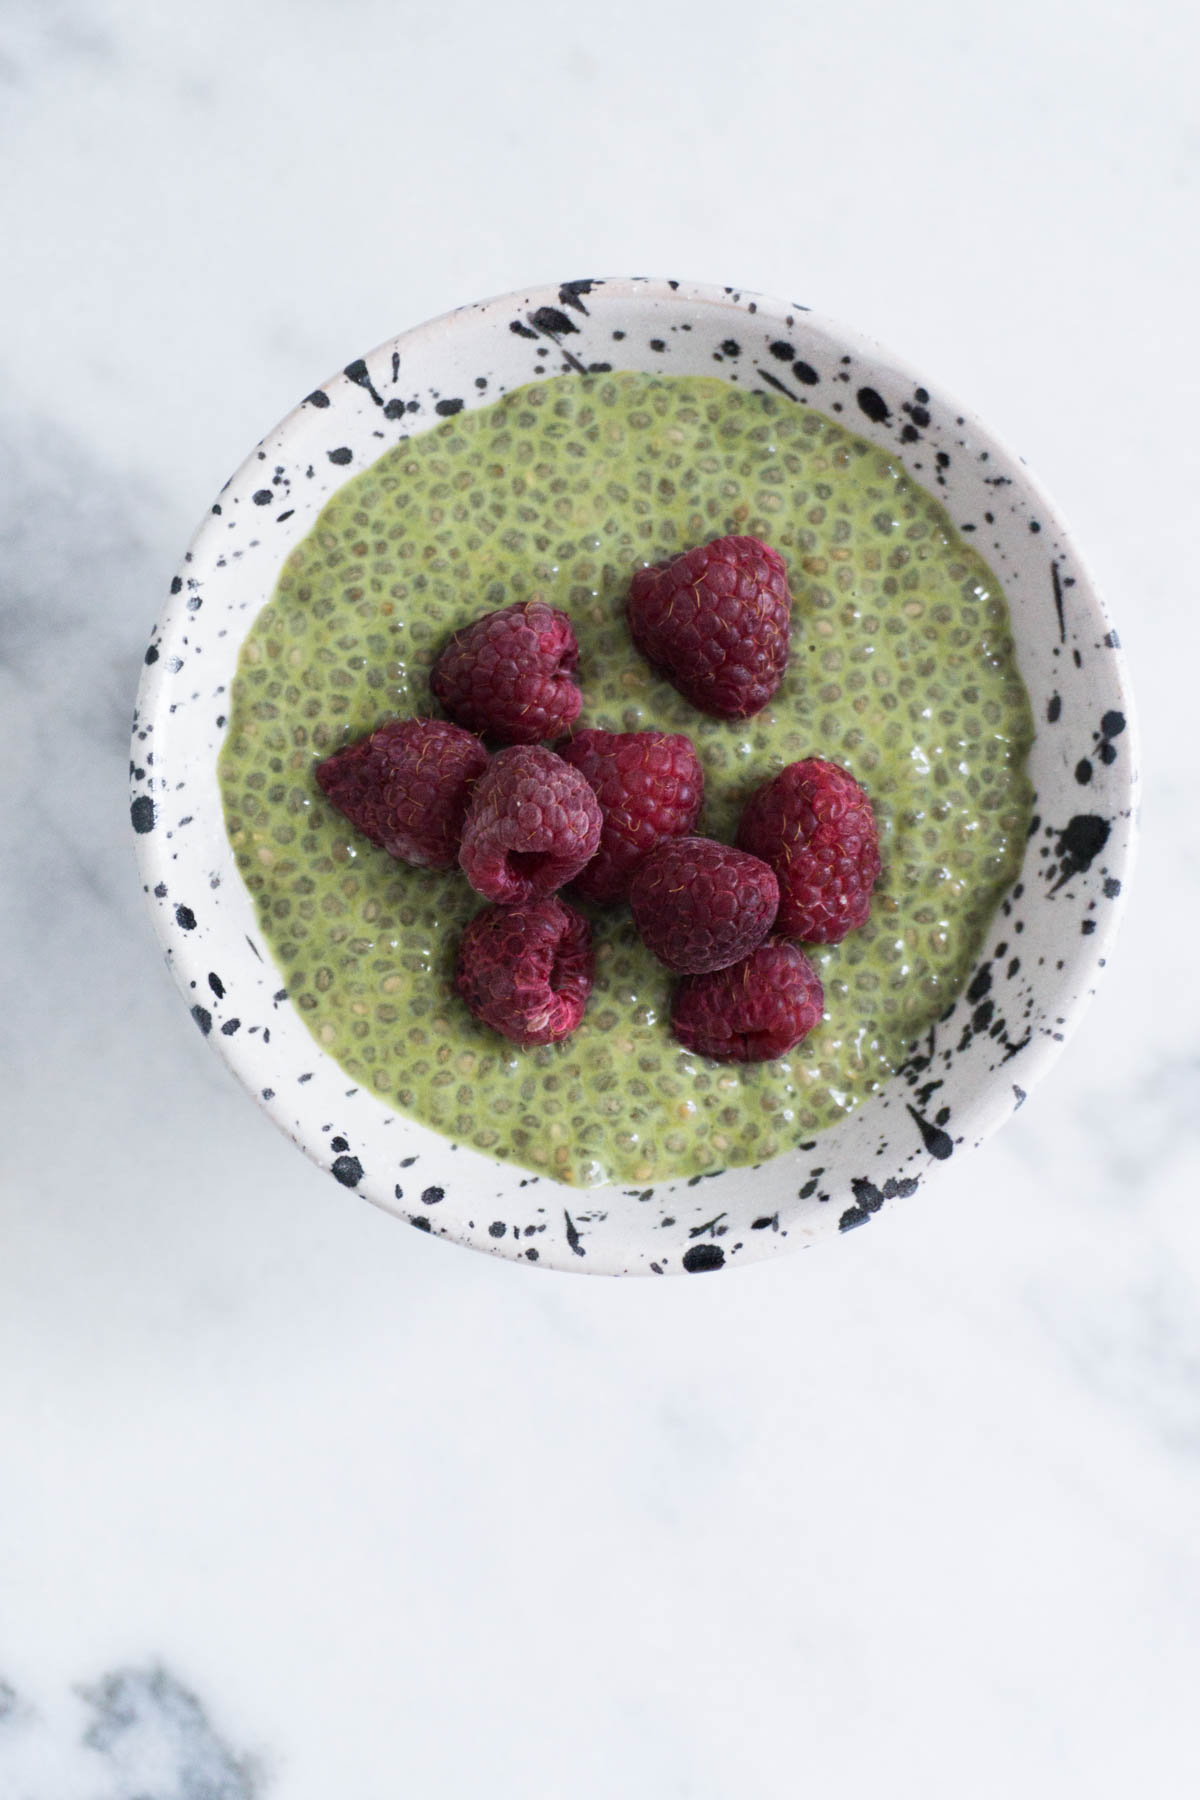 Matcha Chia Pudding Recipe / Healthy Vegan Breakfast / RG Daily Blog